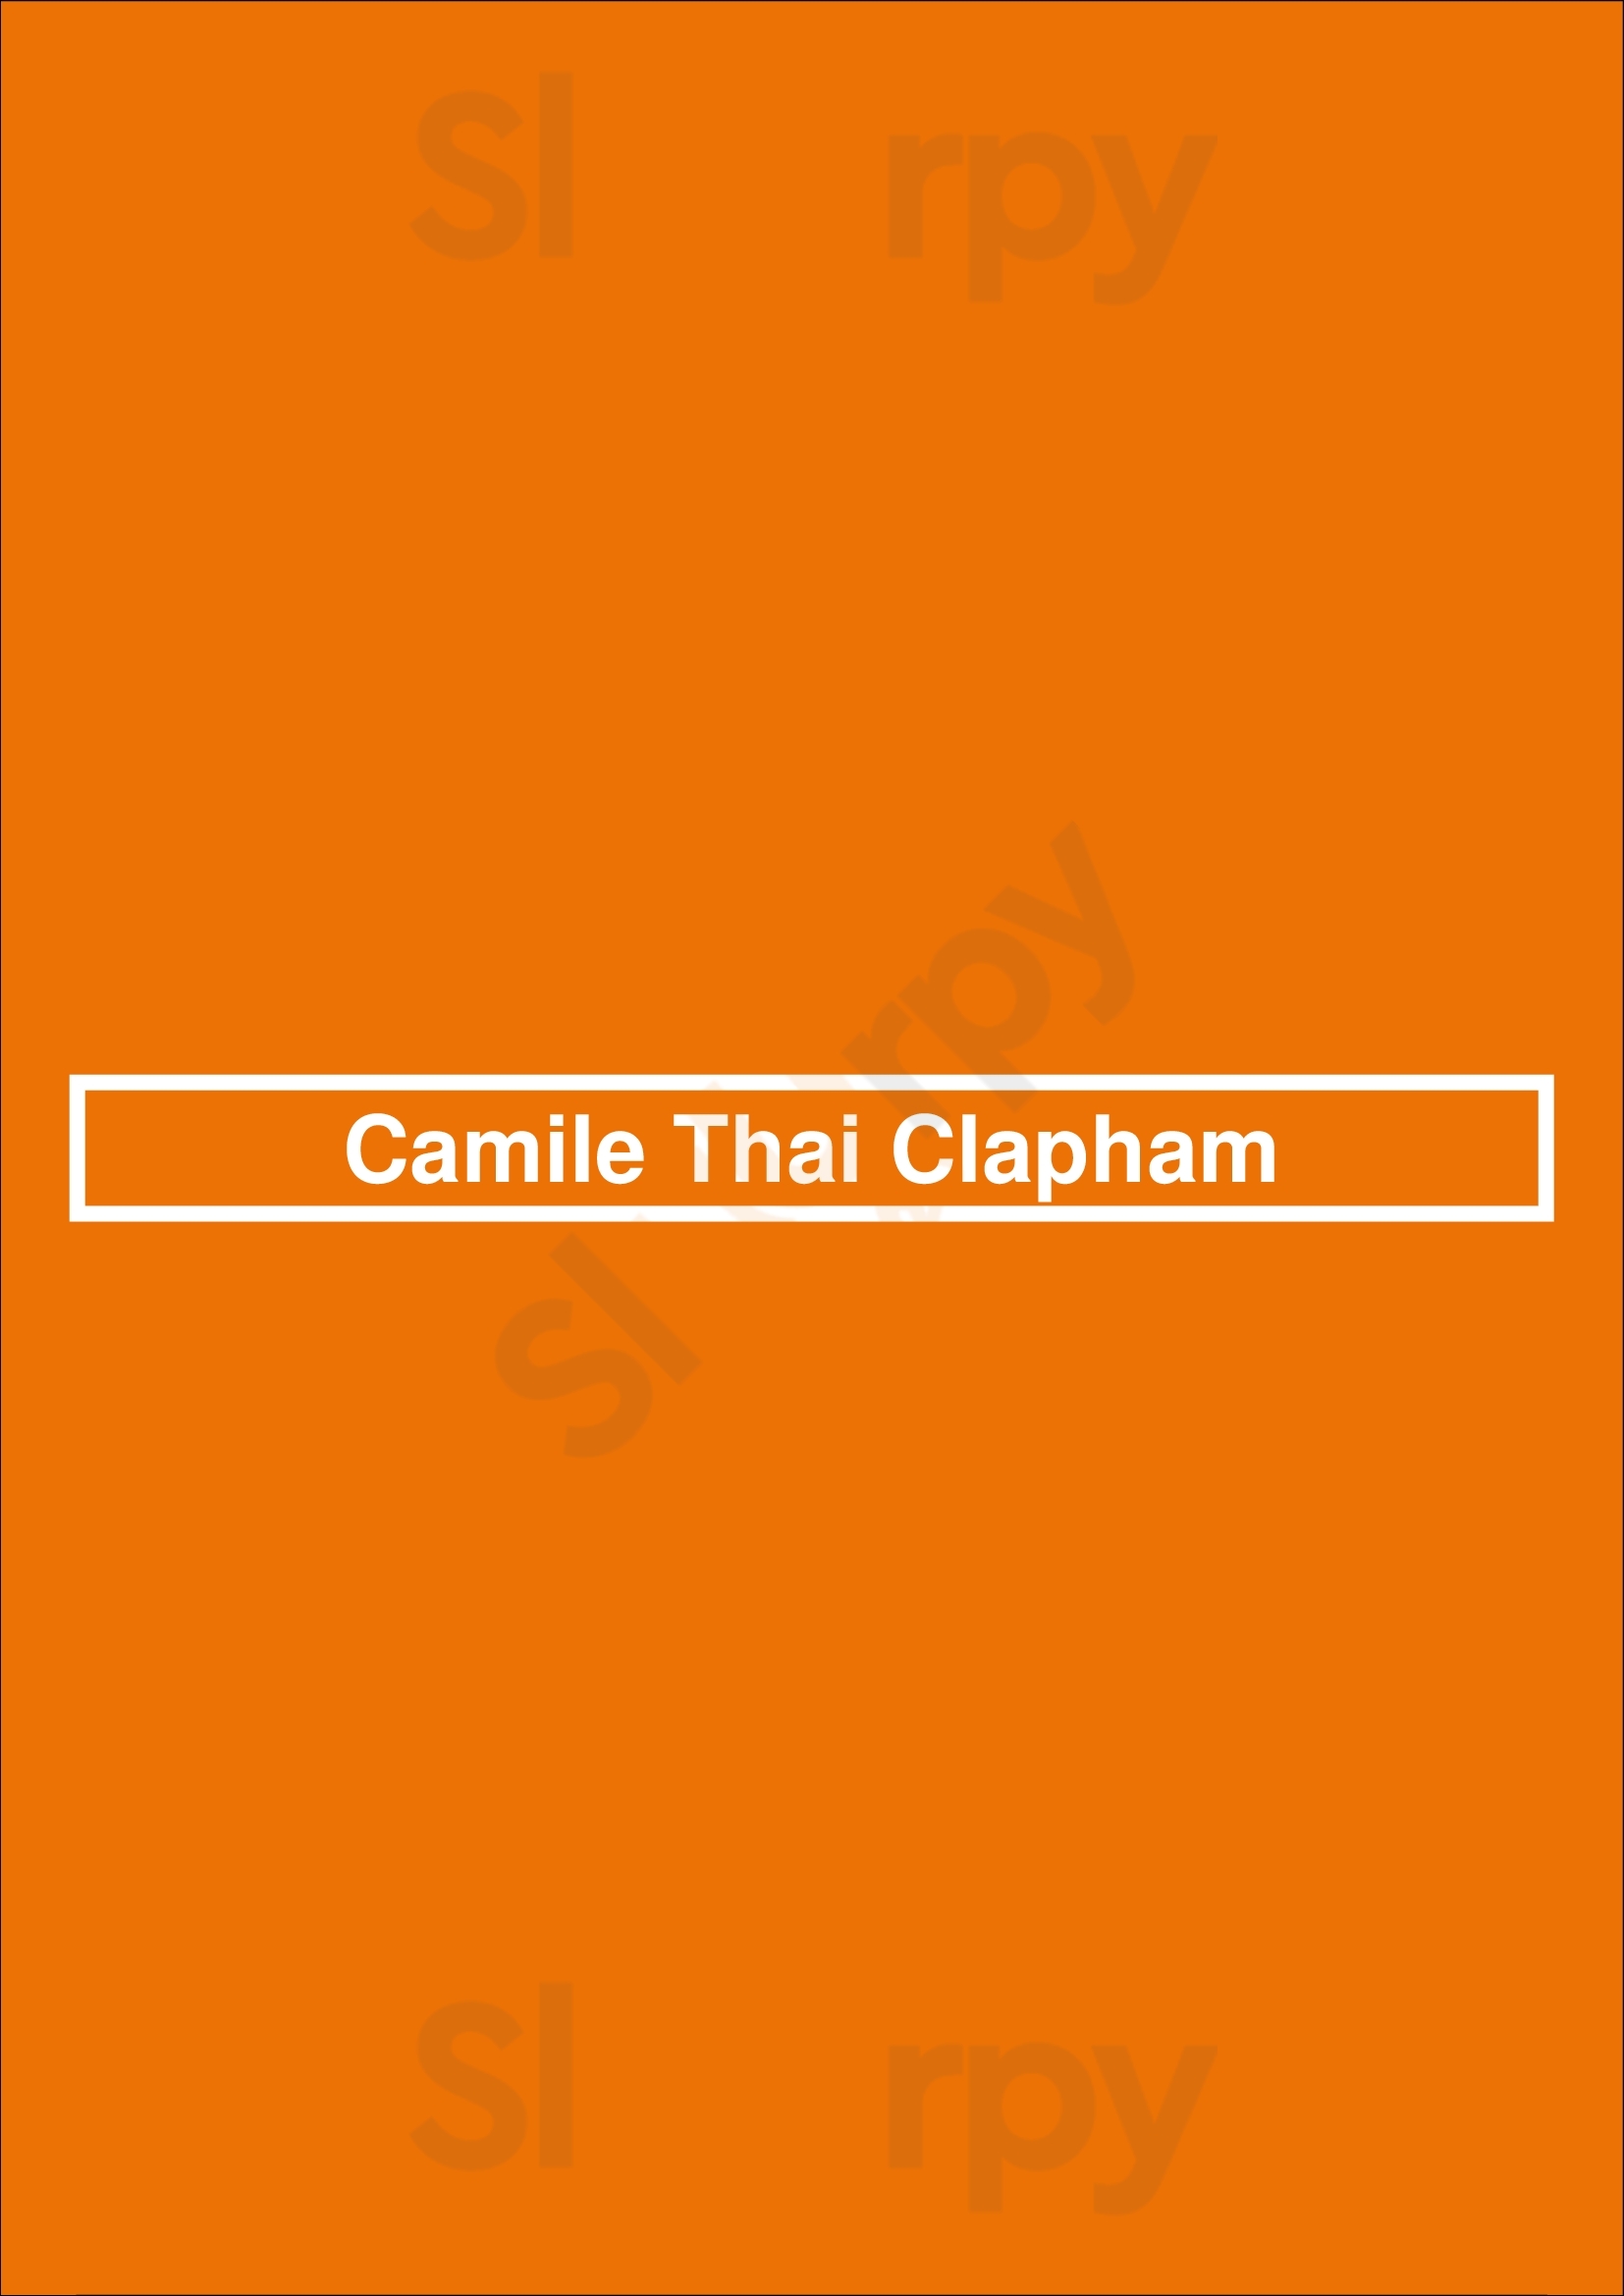 Camile Thai Clapham London Menu - 1